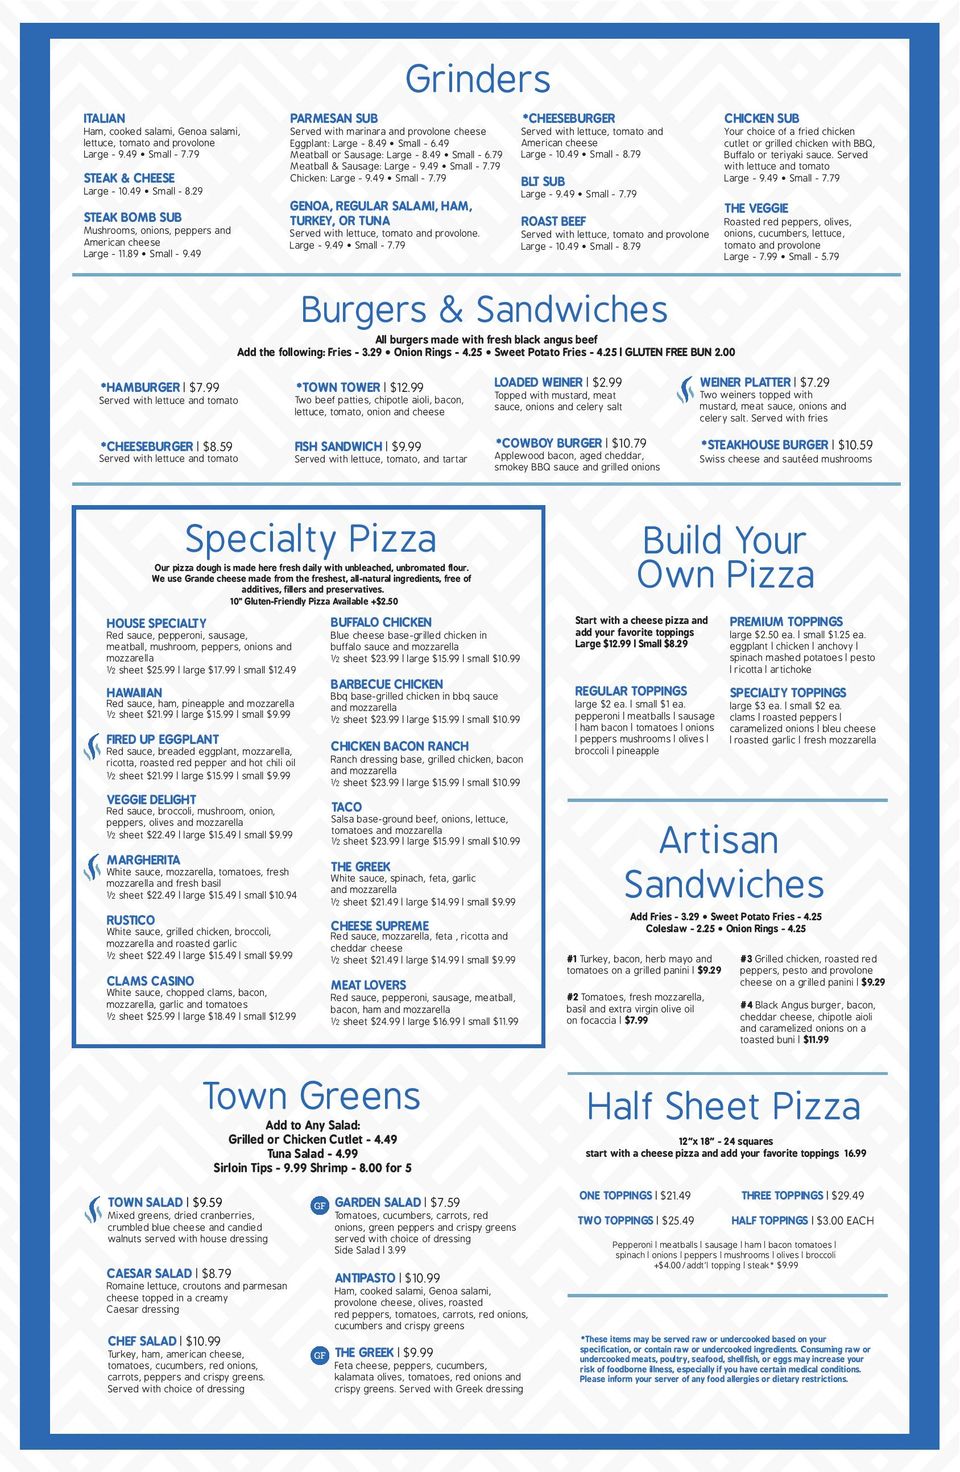 Town grill   pizzeria   asb1699j 11 x 17 menu 2 080222 (4) page 002